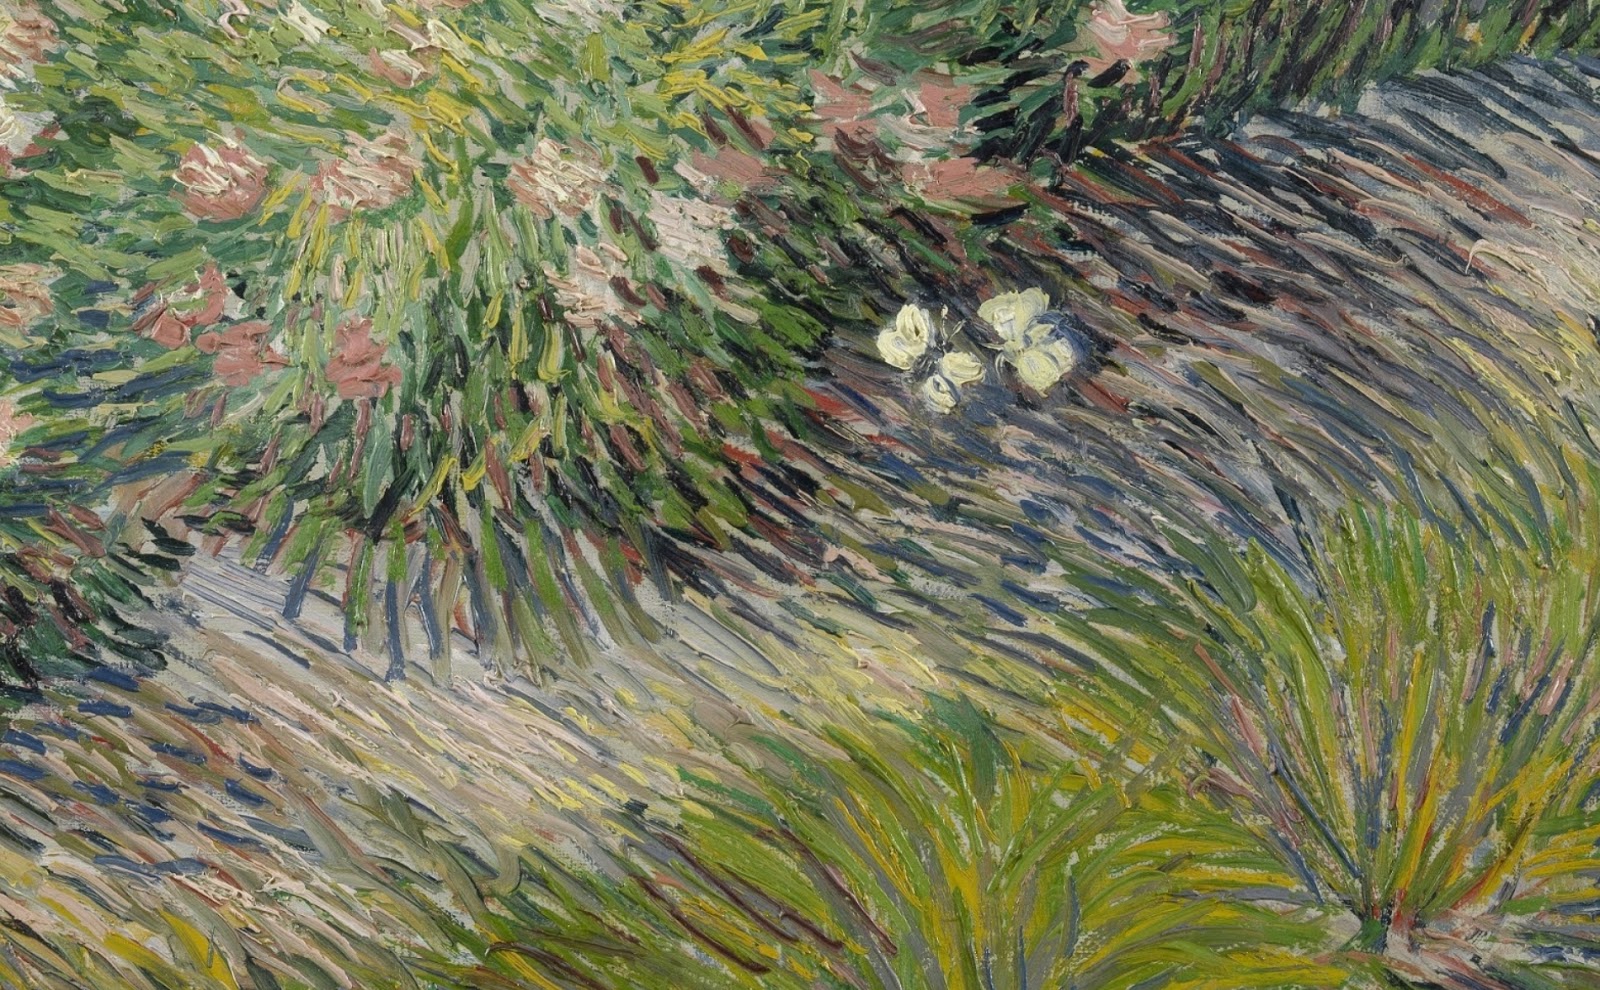 Vincent+Van+Gogh-1853-1890 (492).jpg